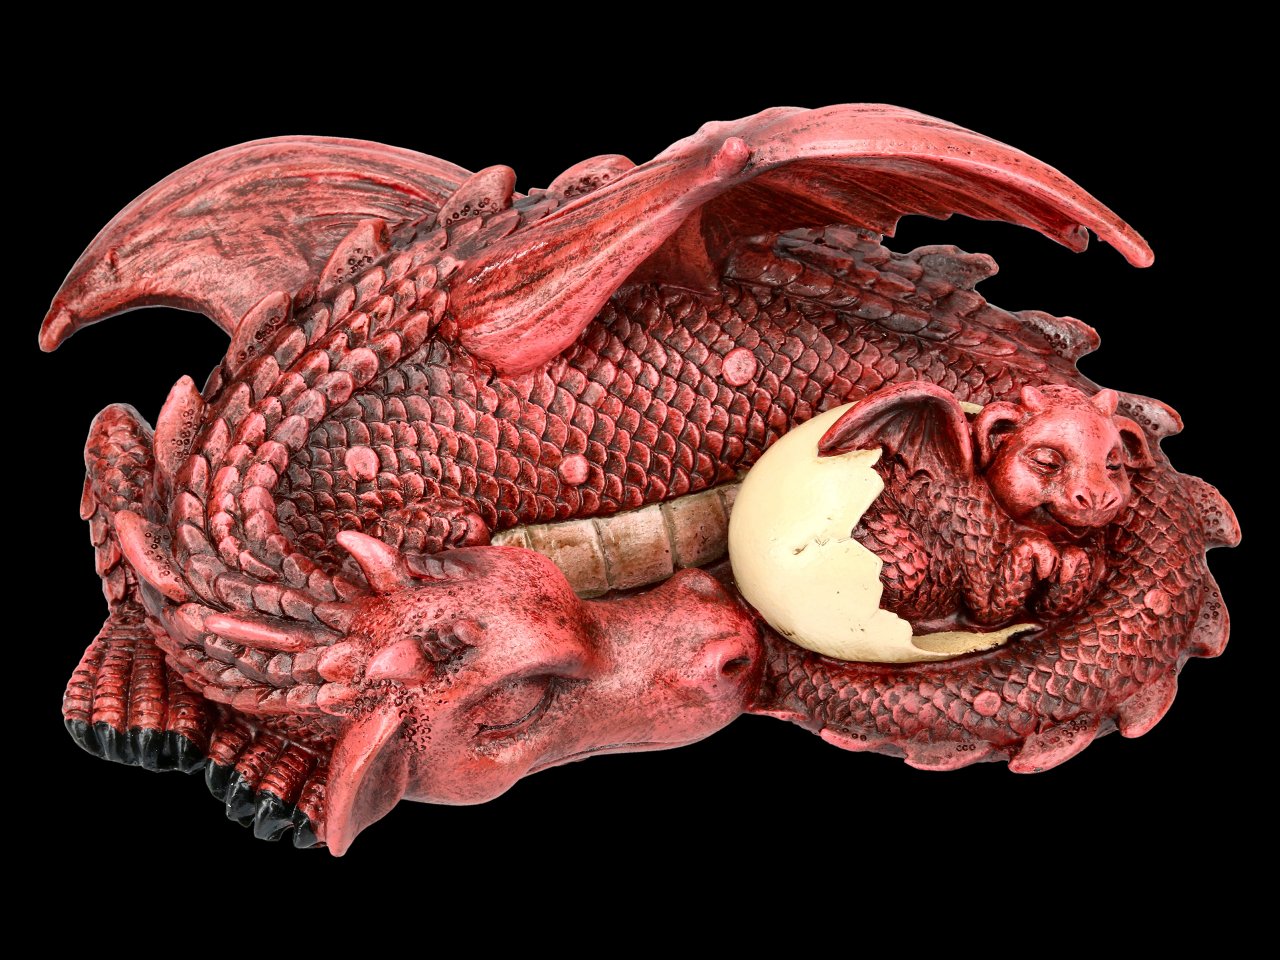 Dragon Figurine - Dream a little Dream - red